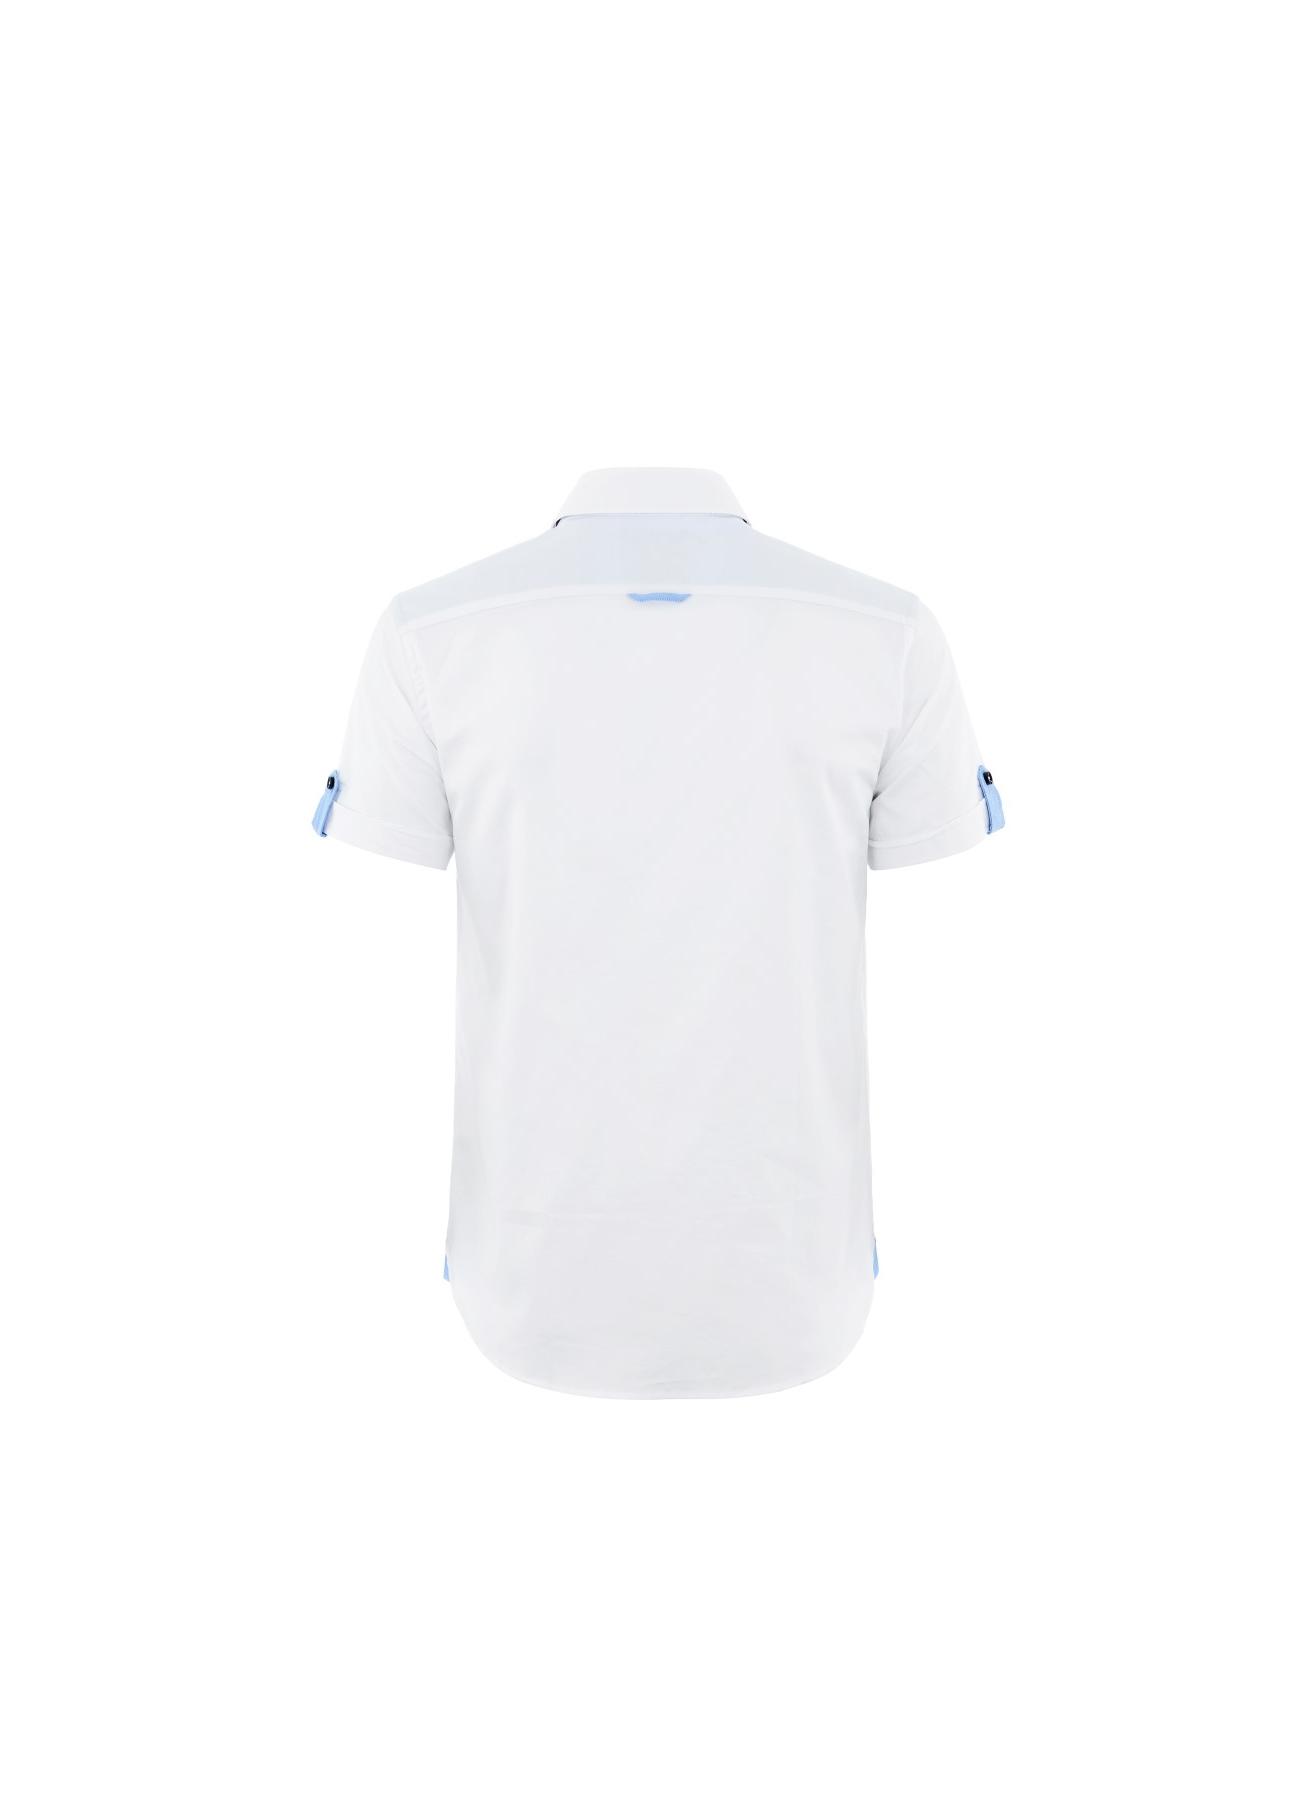 Koszula męska KOSMT-0017-11(W17)